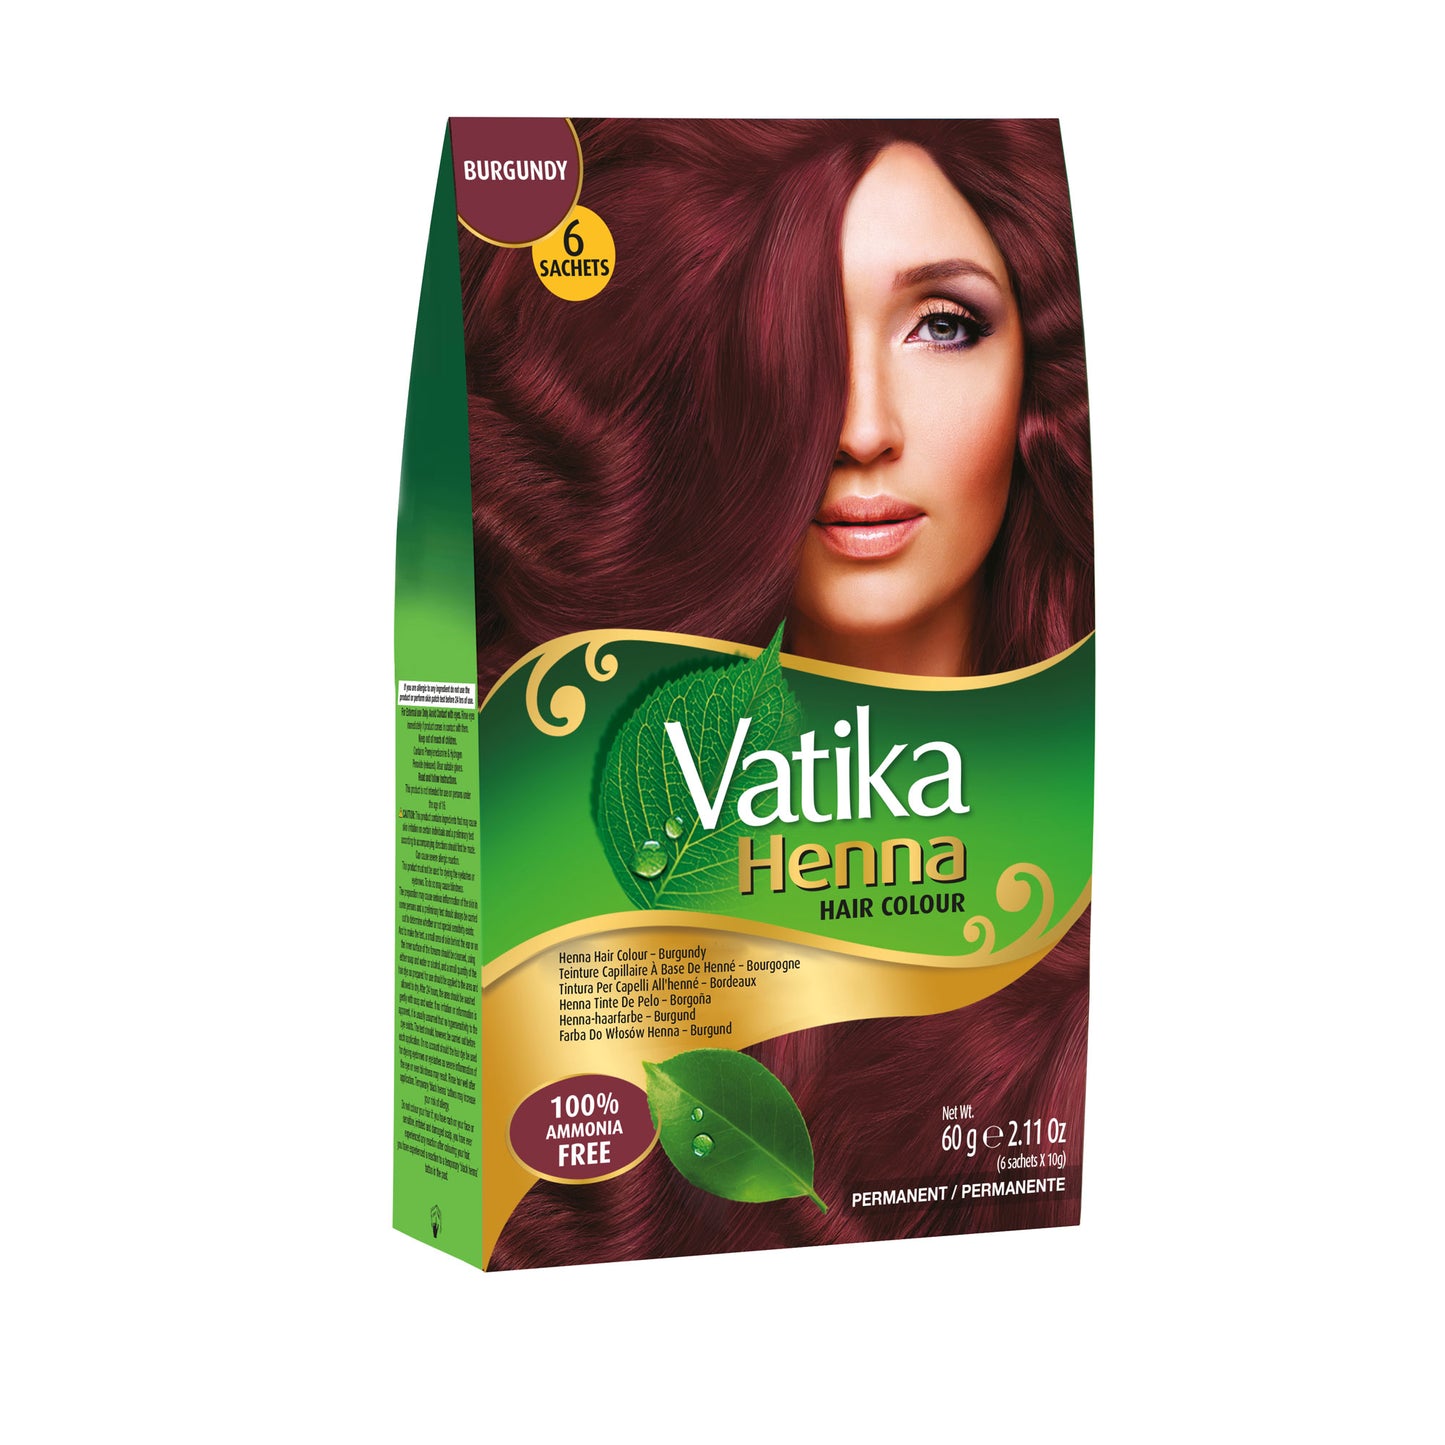 Vatika Henna Hair Colour - Burgandy 10g-UK-New